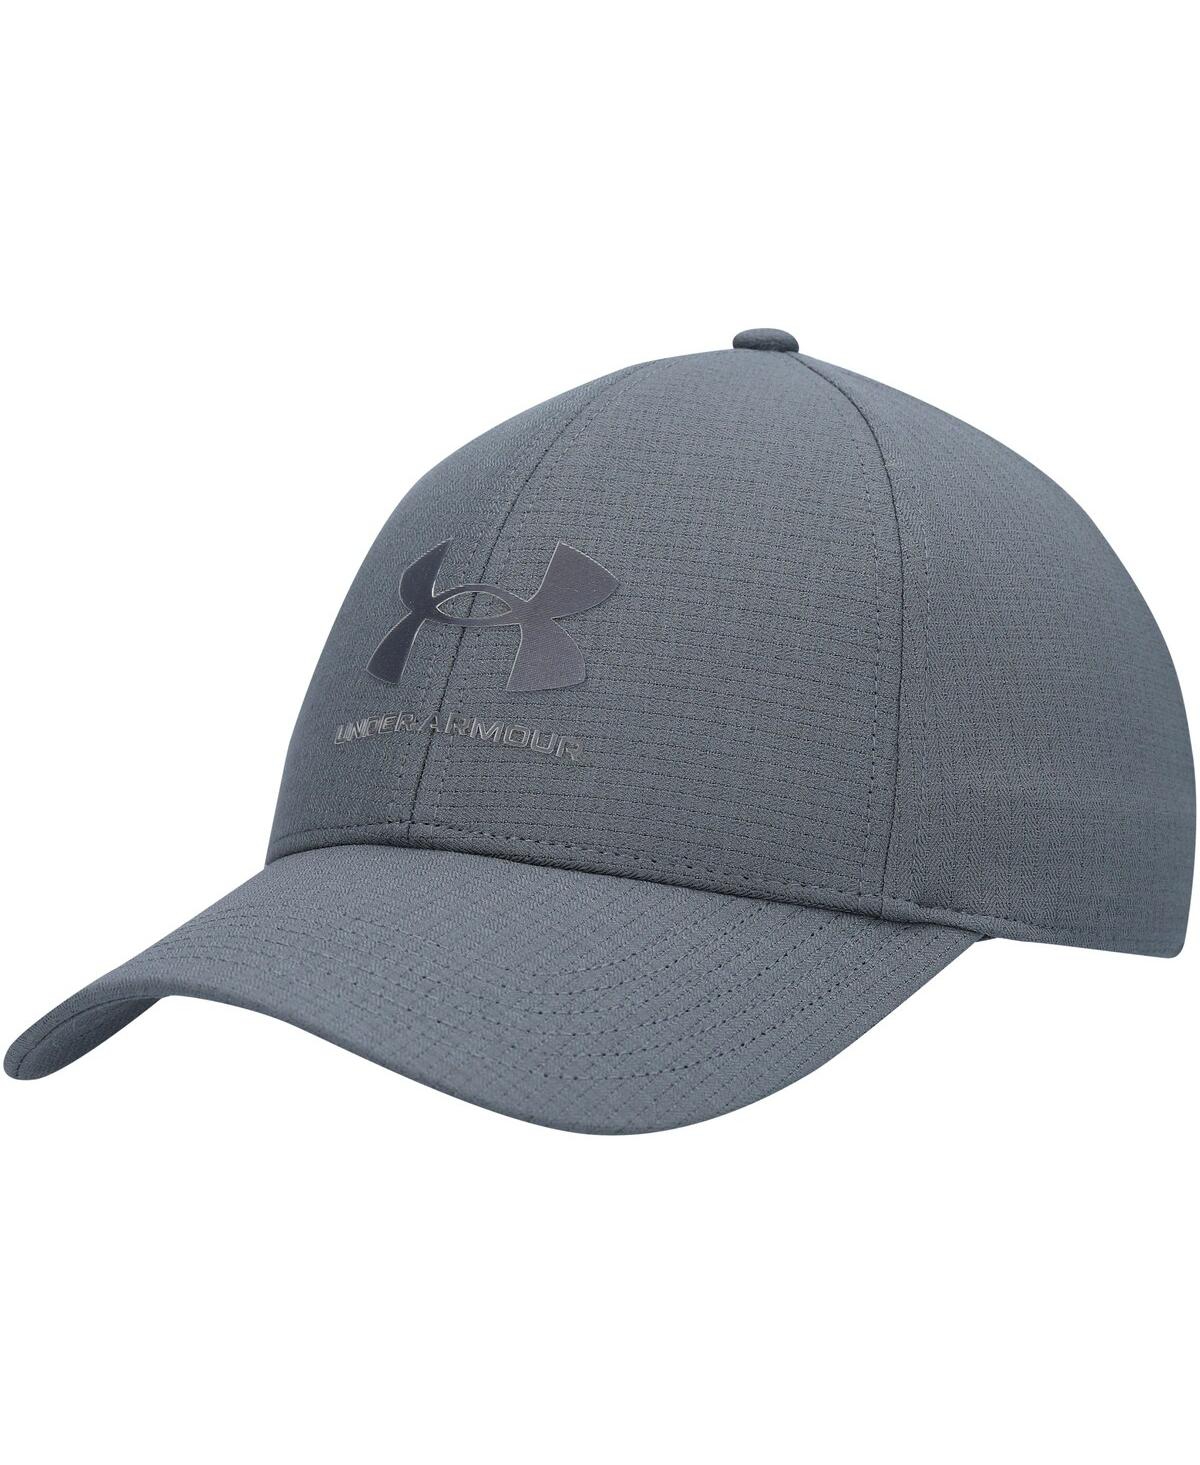 Under Armour Men's  Graphite Performance Adjustable Hat